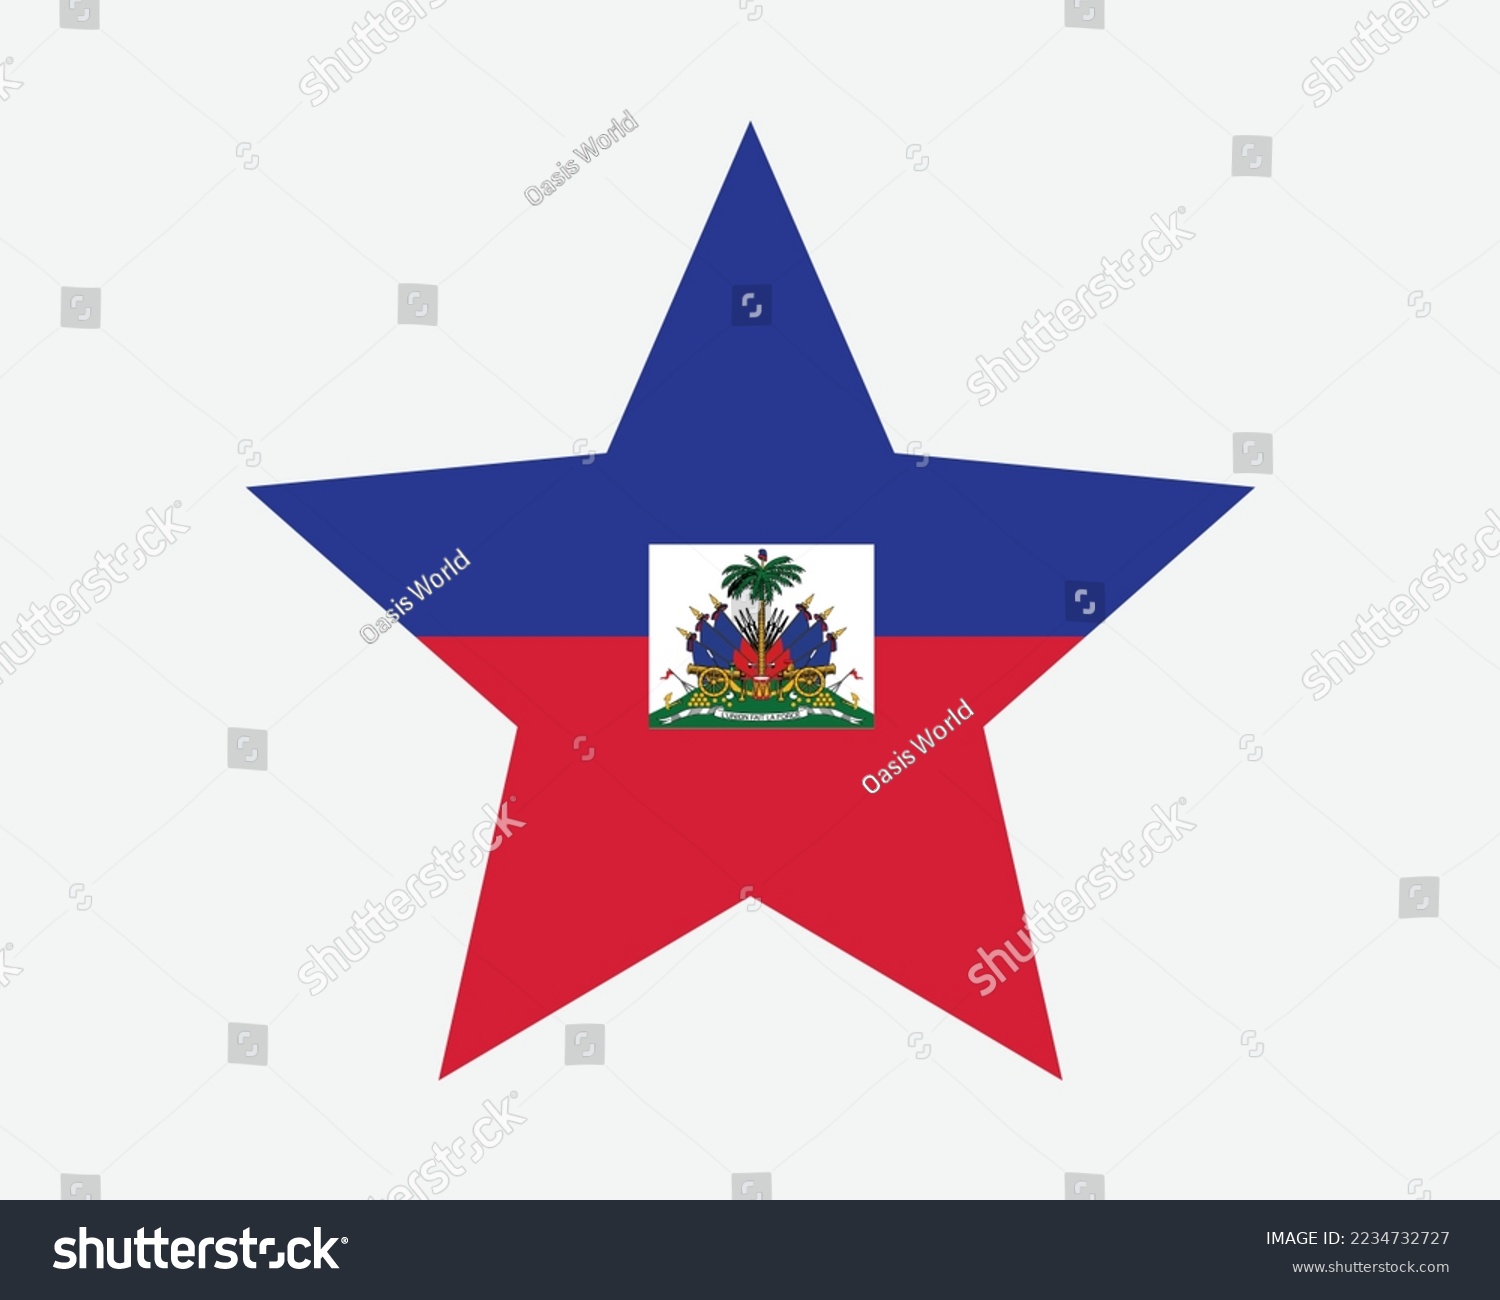 SVG of Haiti Star Flag. Haitian Star Shape Flag. Republic of Haiti Country National Banner Icon Symbol Vector Flat Artwork Graphic Illustration svg